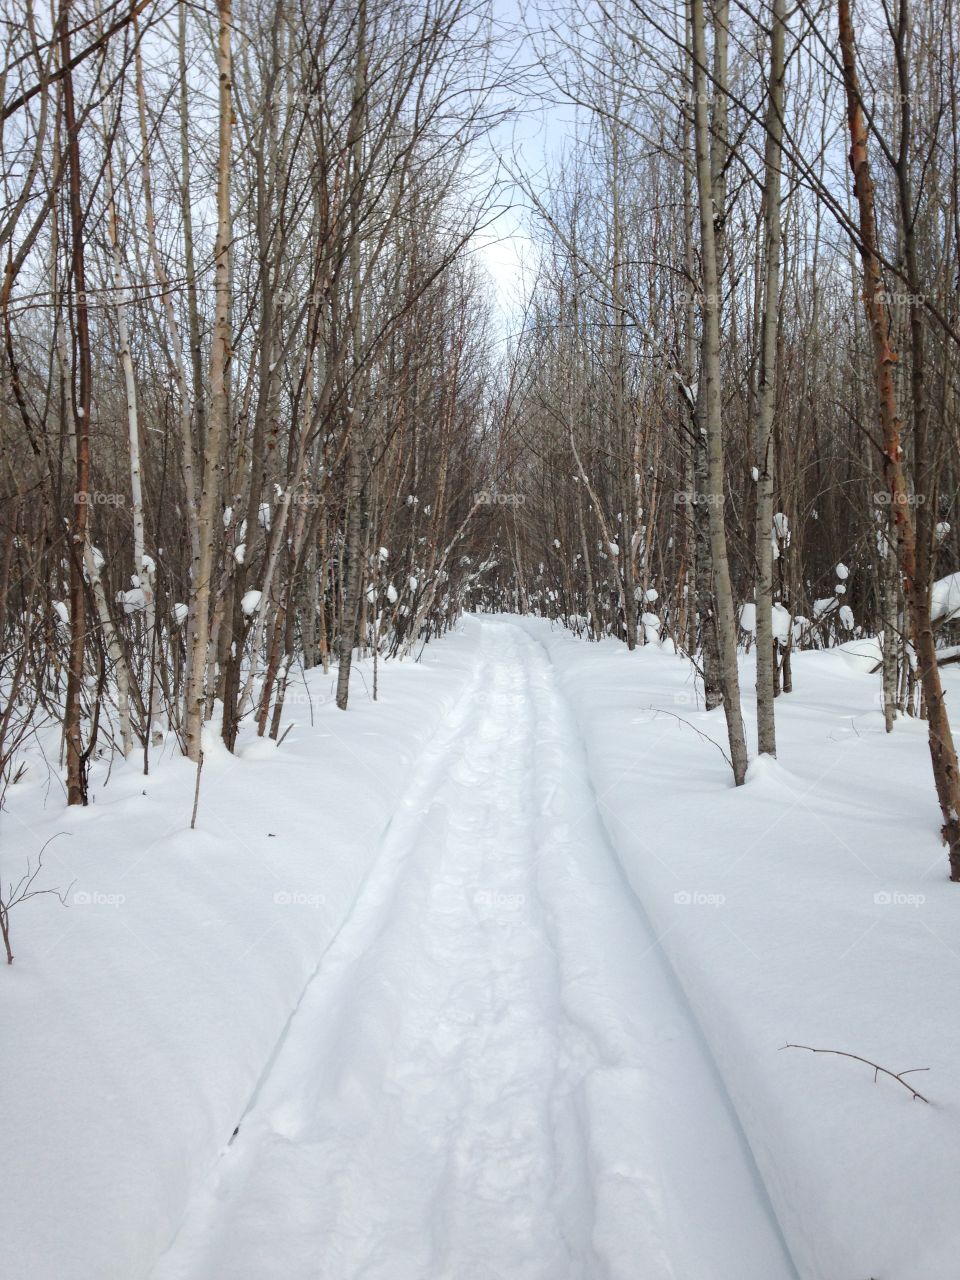 Snowshoe trail. Snowshoeing crisp winter day